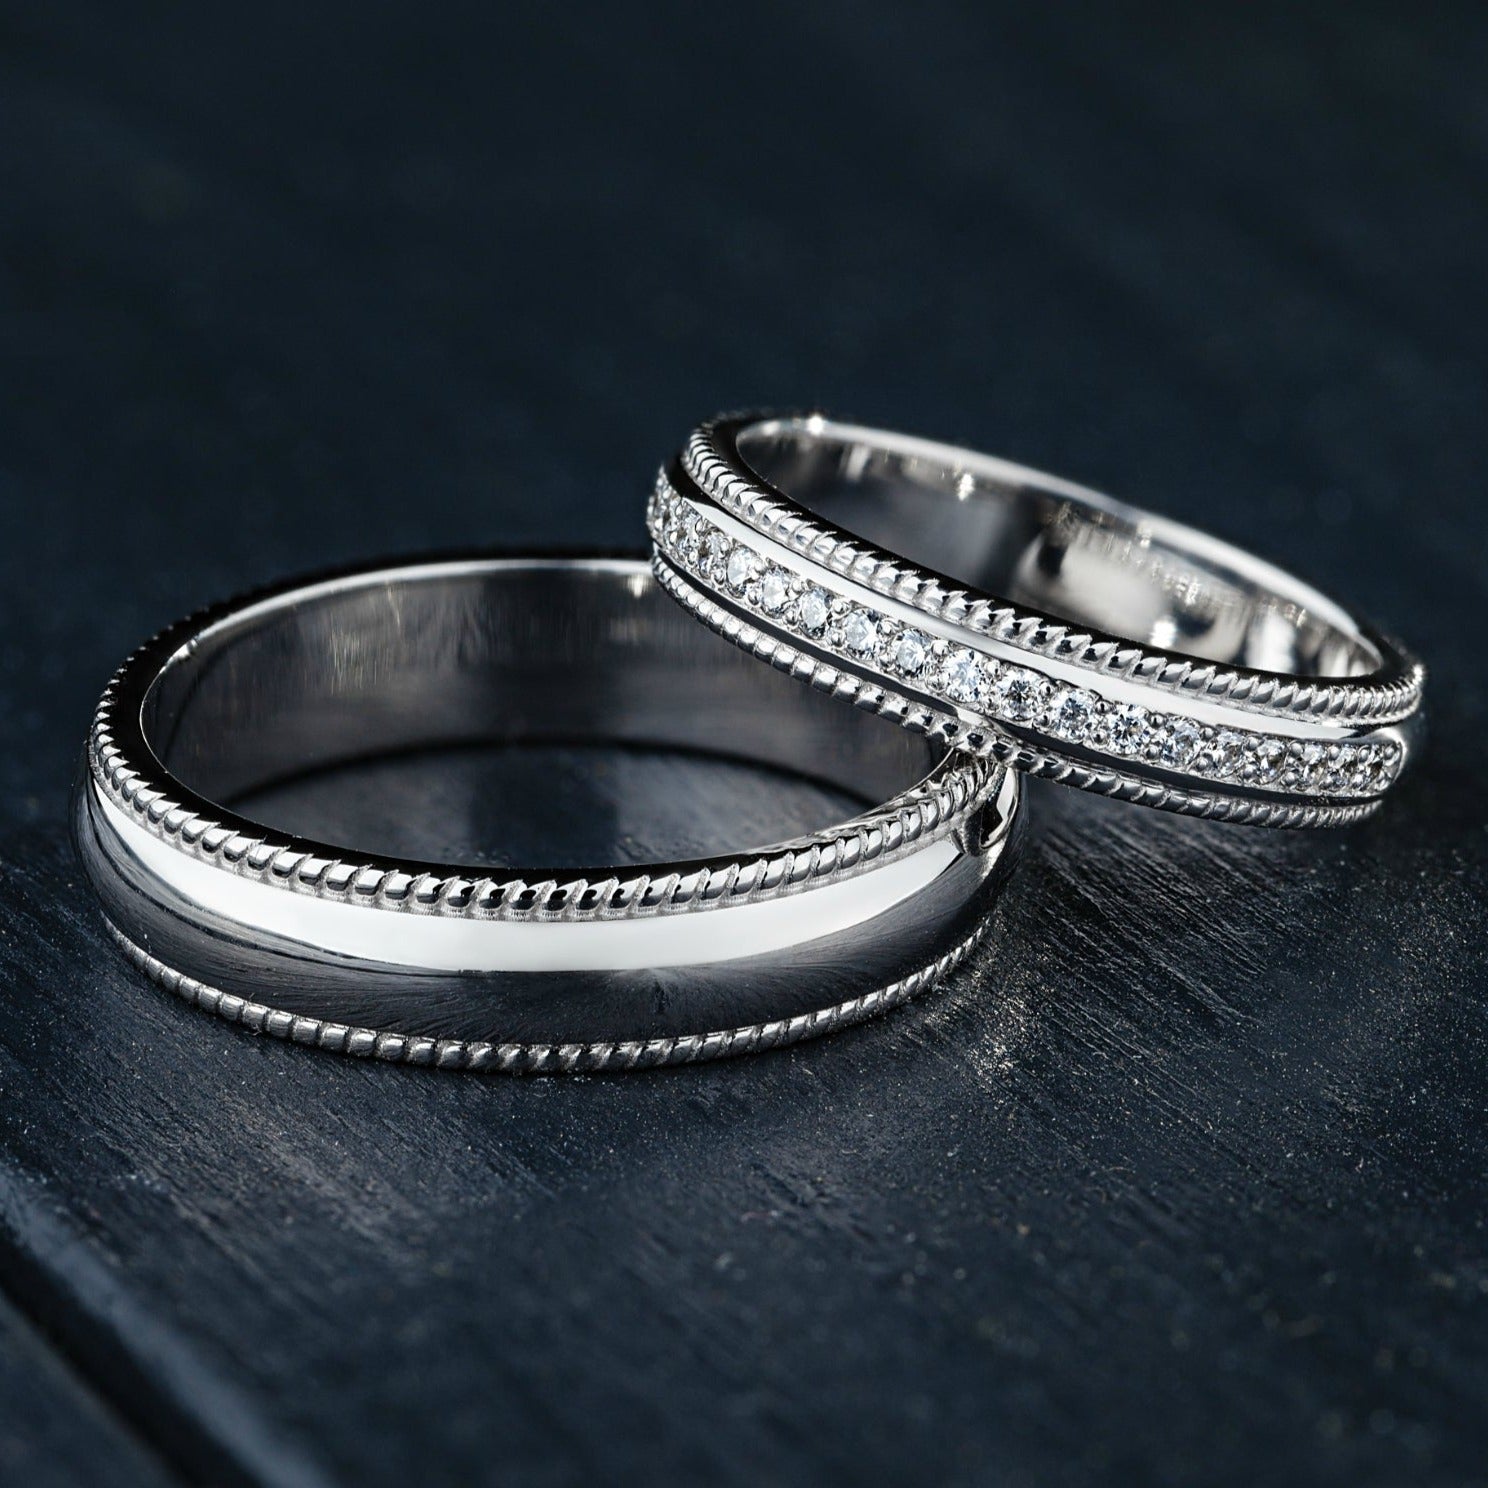 Gold wedding rings set with diamonds - escorialjewelry